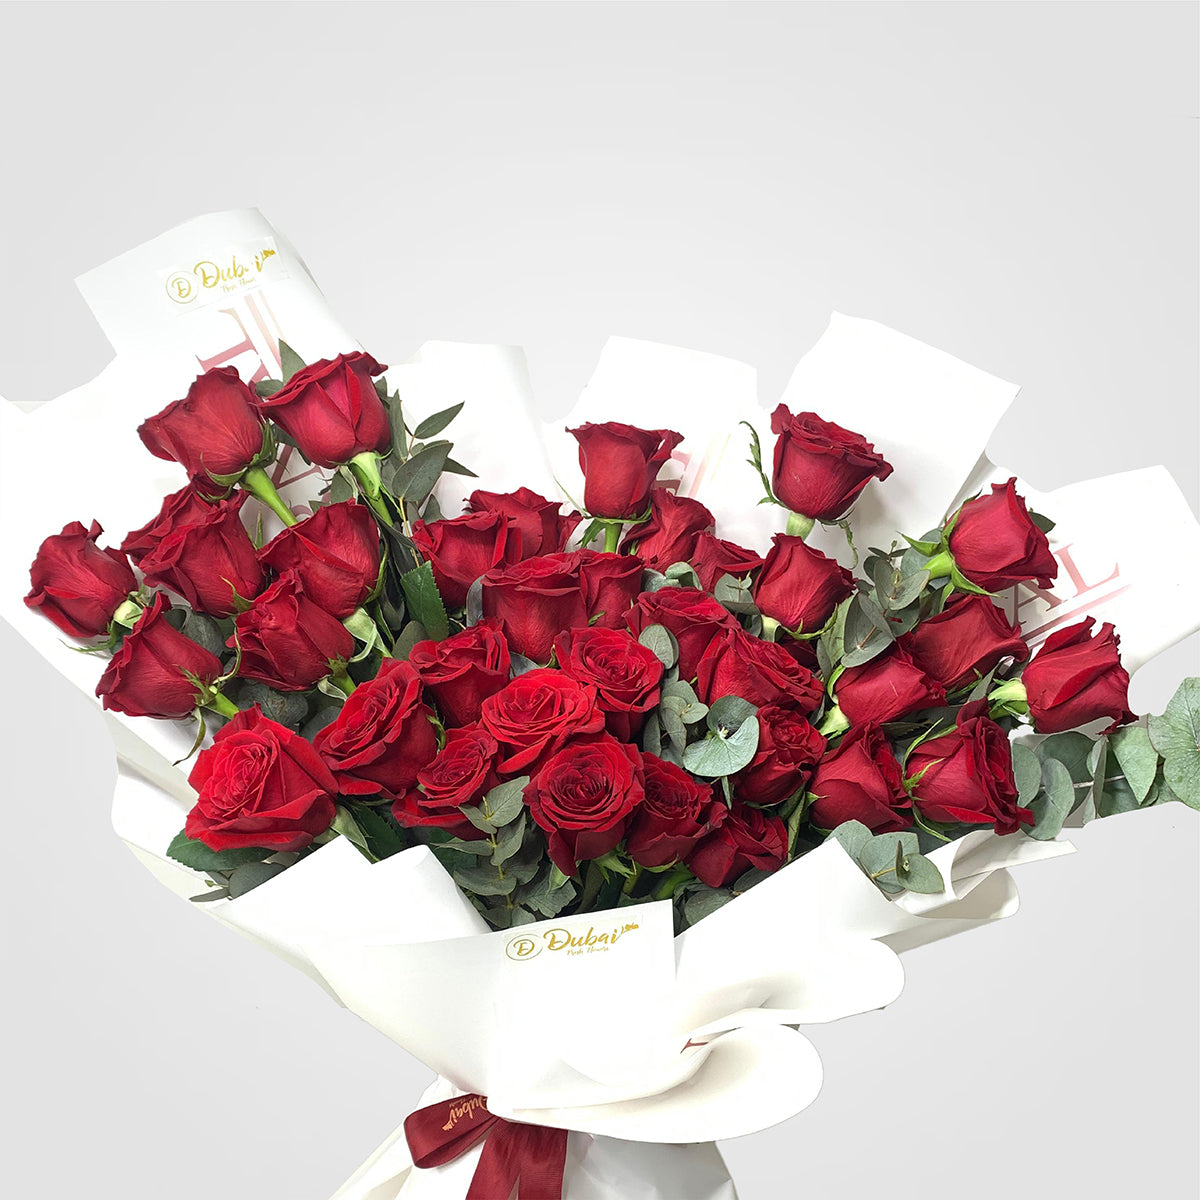 Custom Gift And Flowers Delivery App Developer in Dubai.